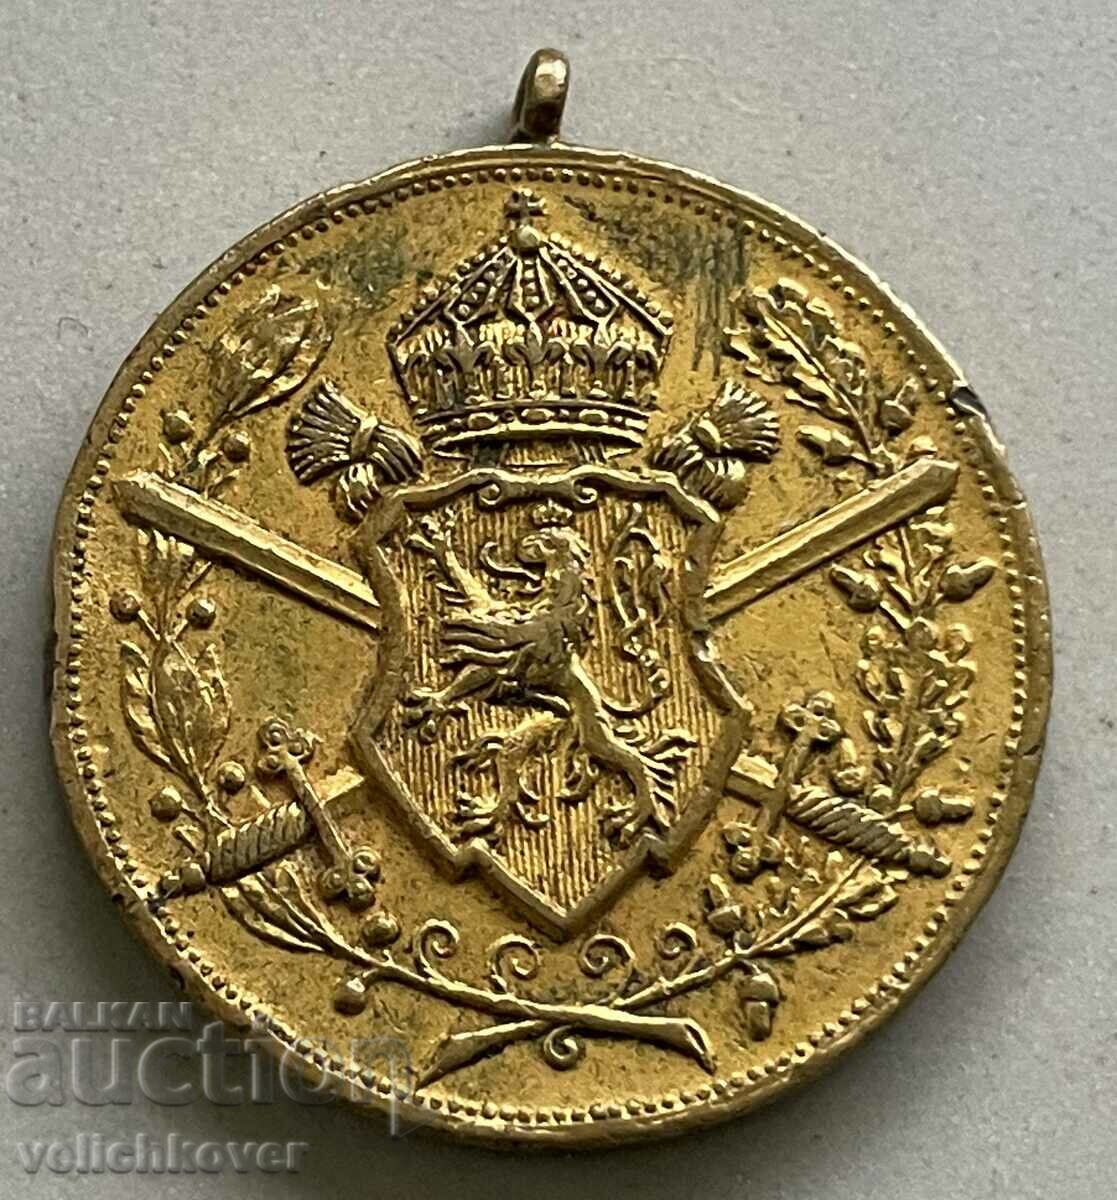 34228 Kingdom of Bulgaria medal for participation PSV 1915-1918.